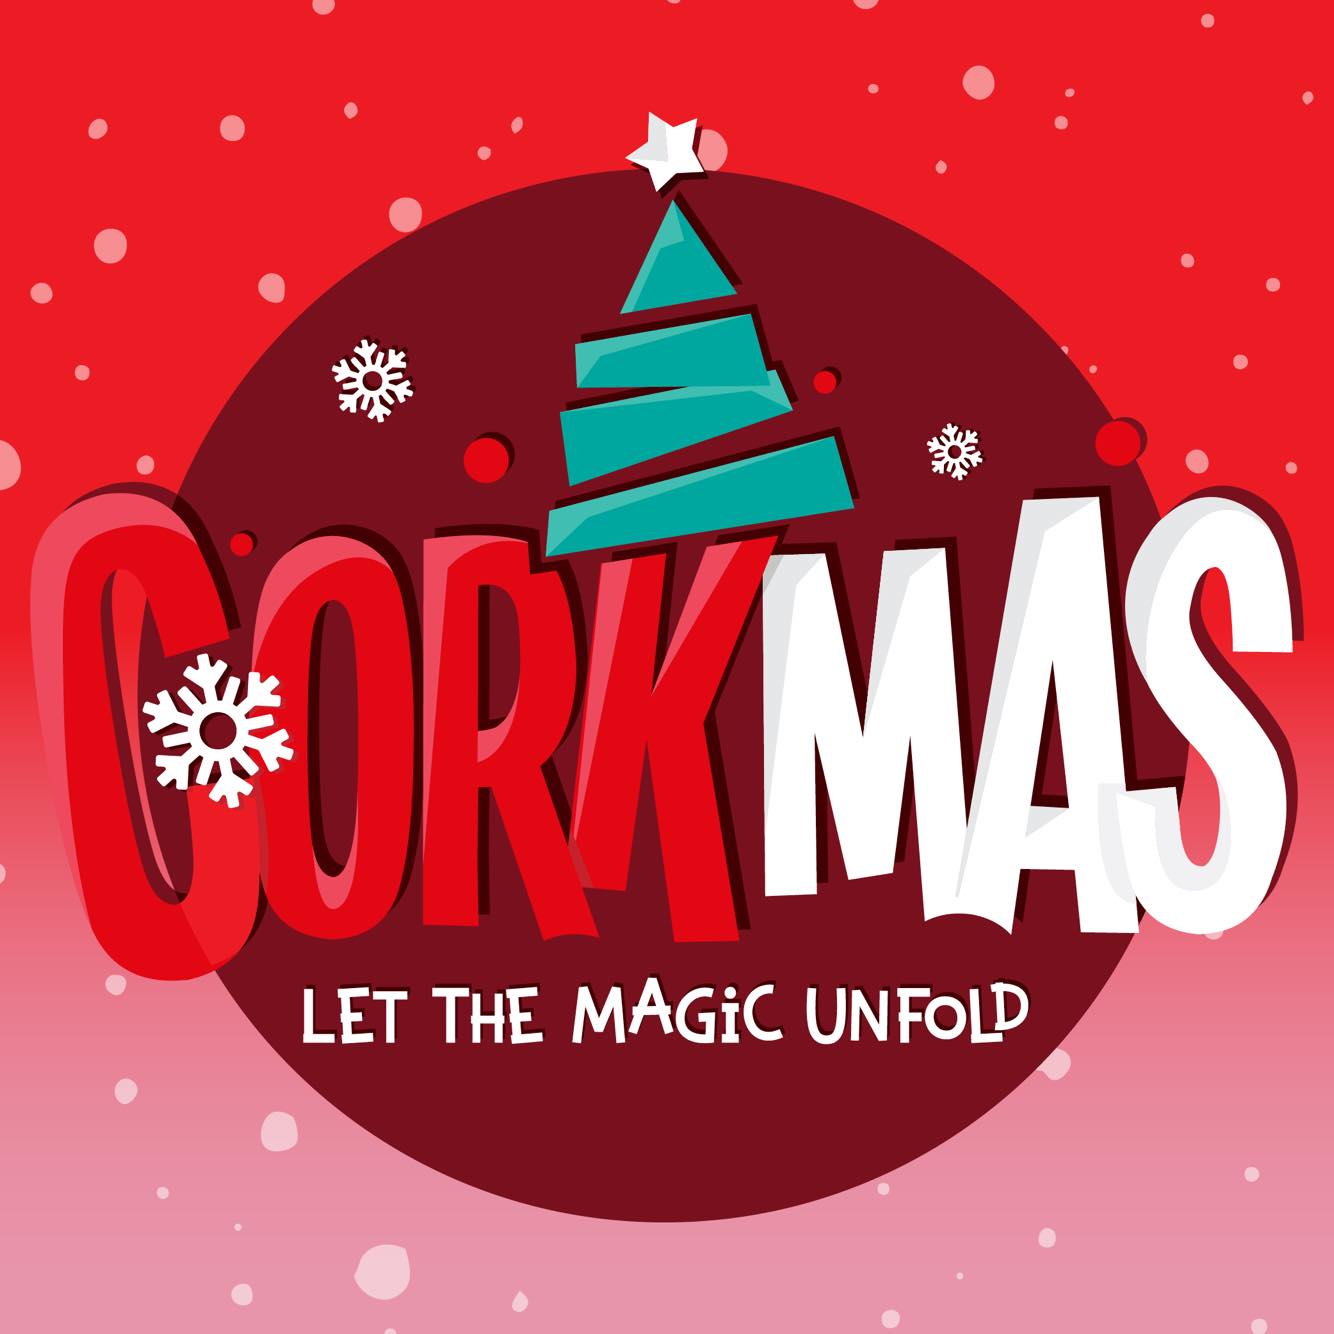 A Cork Christmas Celebration